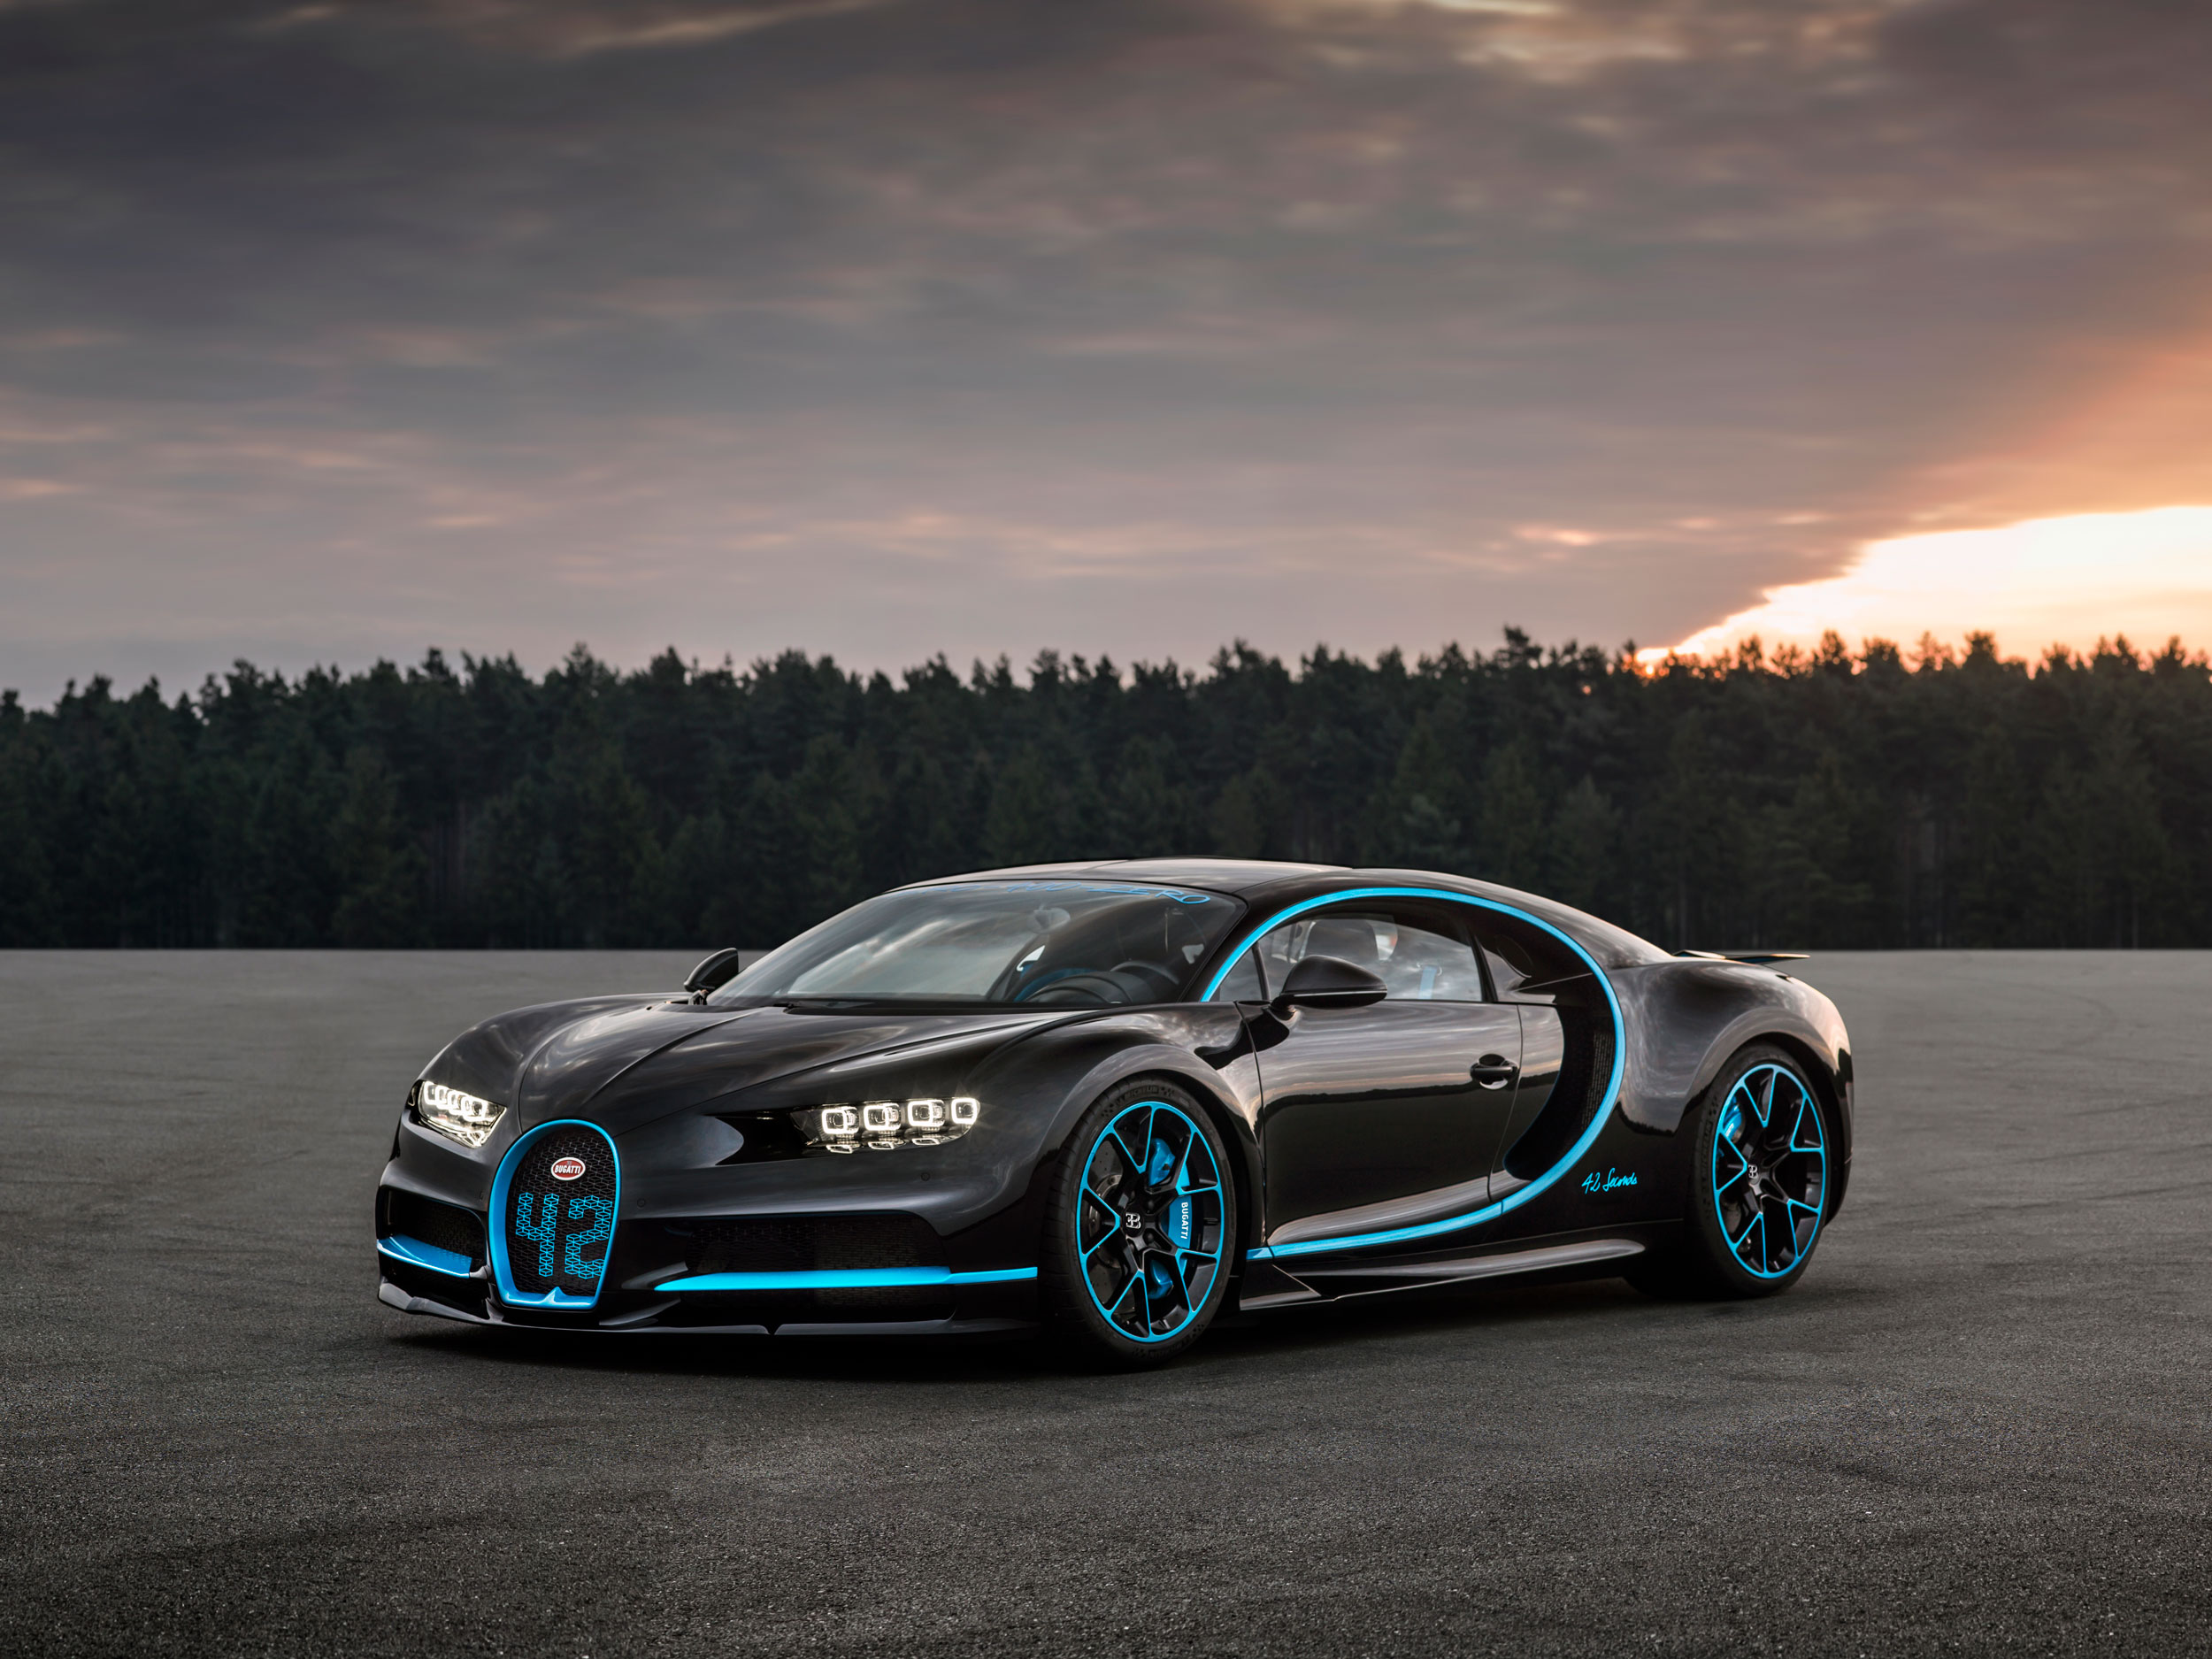 0-400-0 km/h em 42 segundos: Bugatti Chiron define recordes mundiais – ARTIUM 7